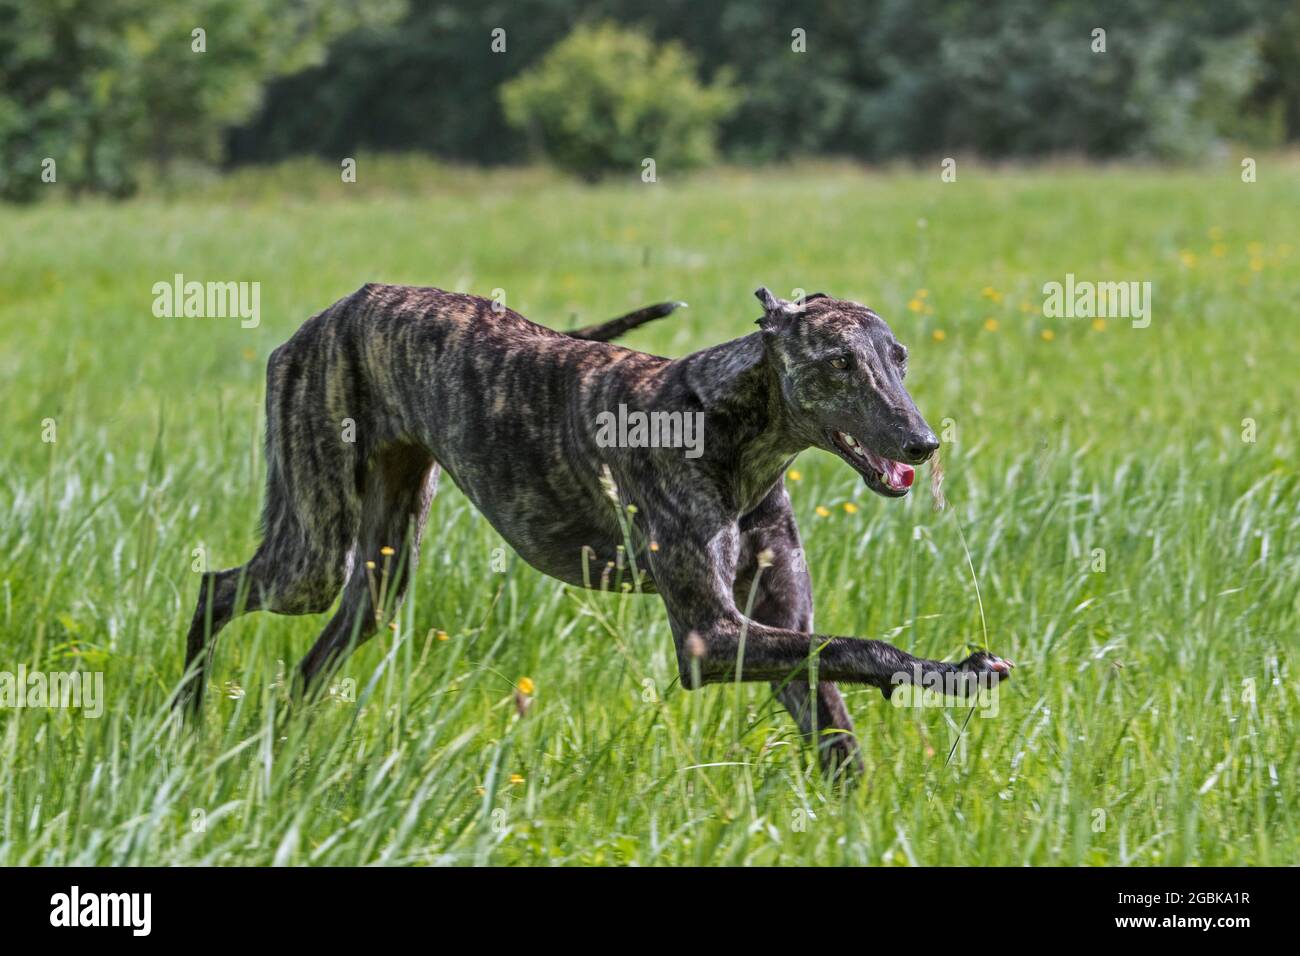 Brindled rough-coated Galgo Español / barcino Spanish galgo / atigrado Spanish sighthound, dog breed of the sighthounds running in field Stock Photo